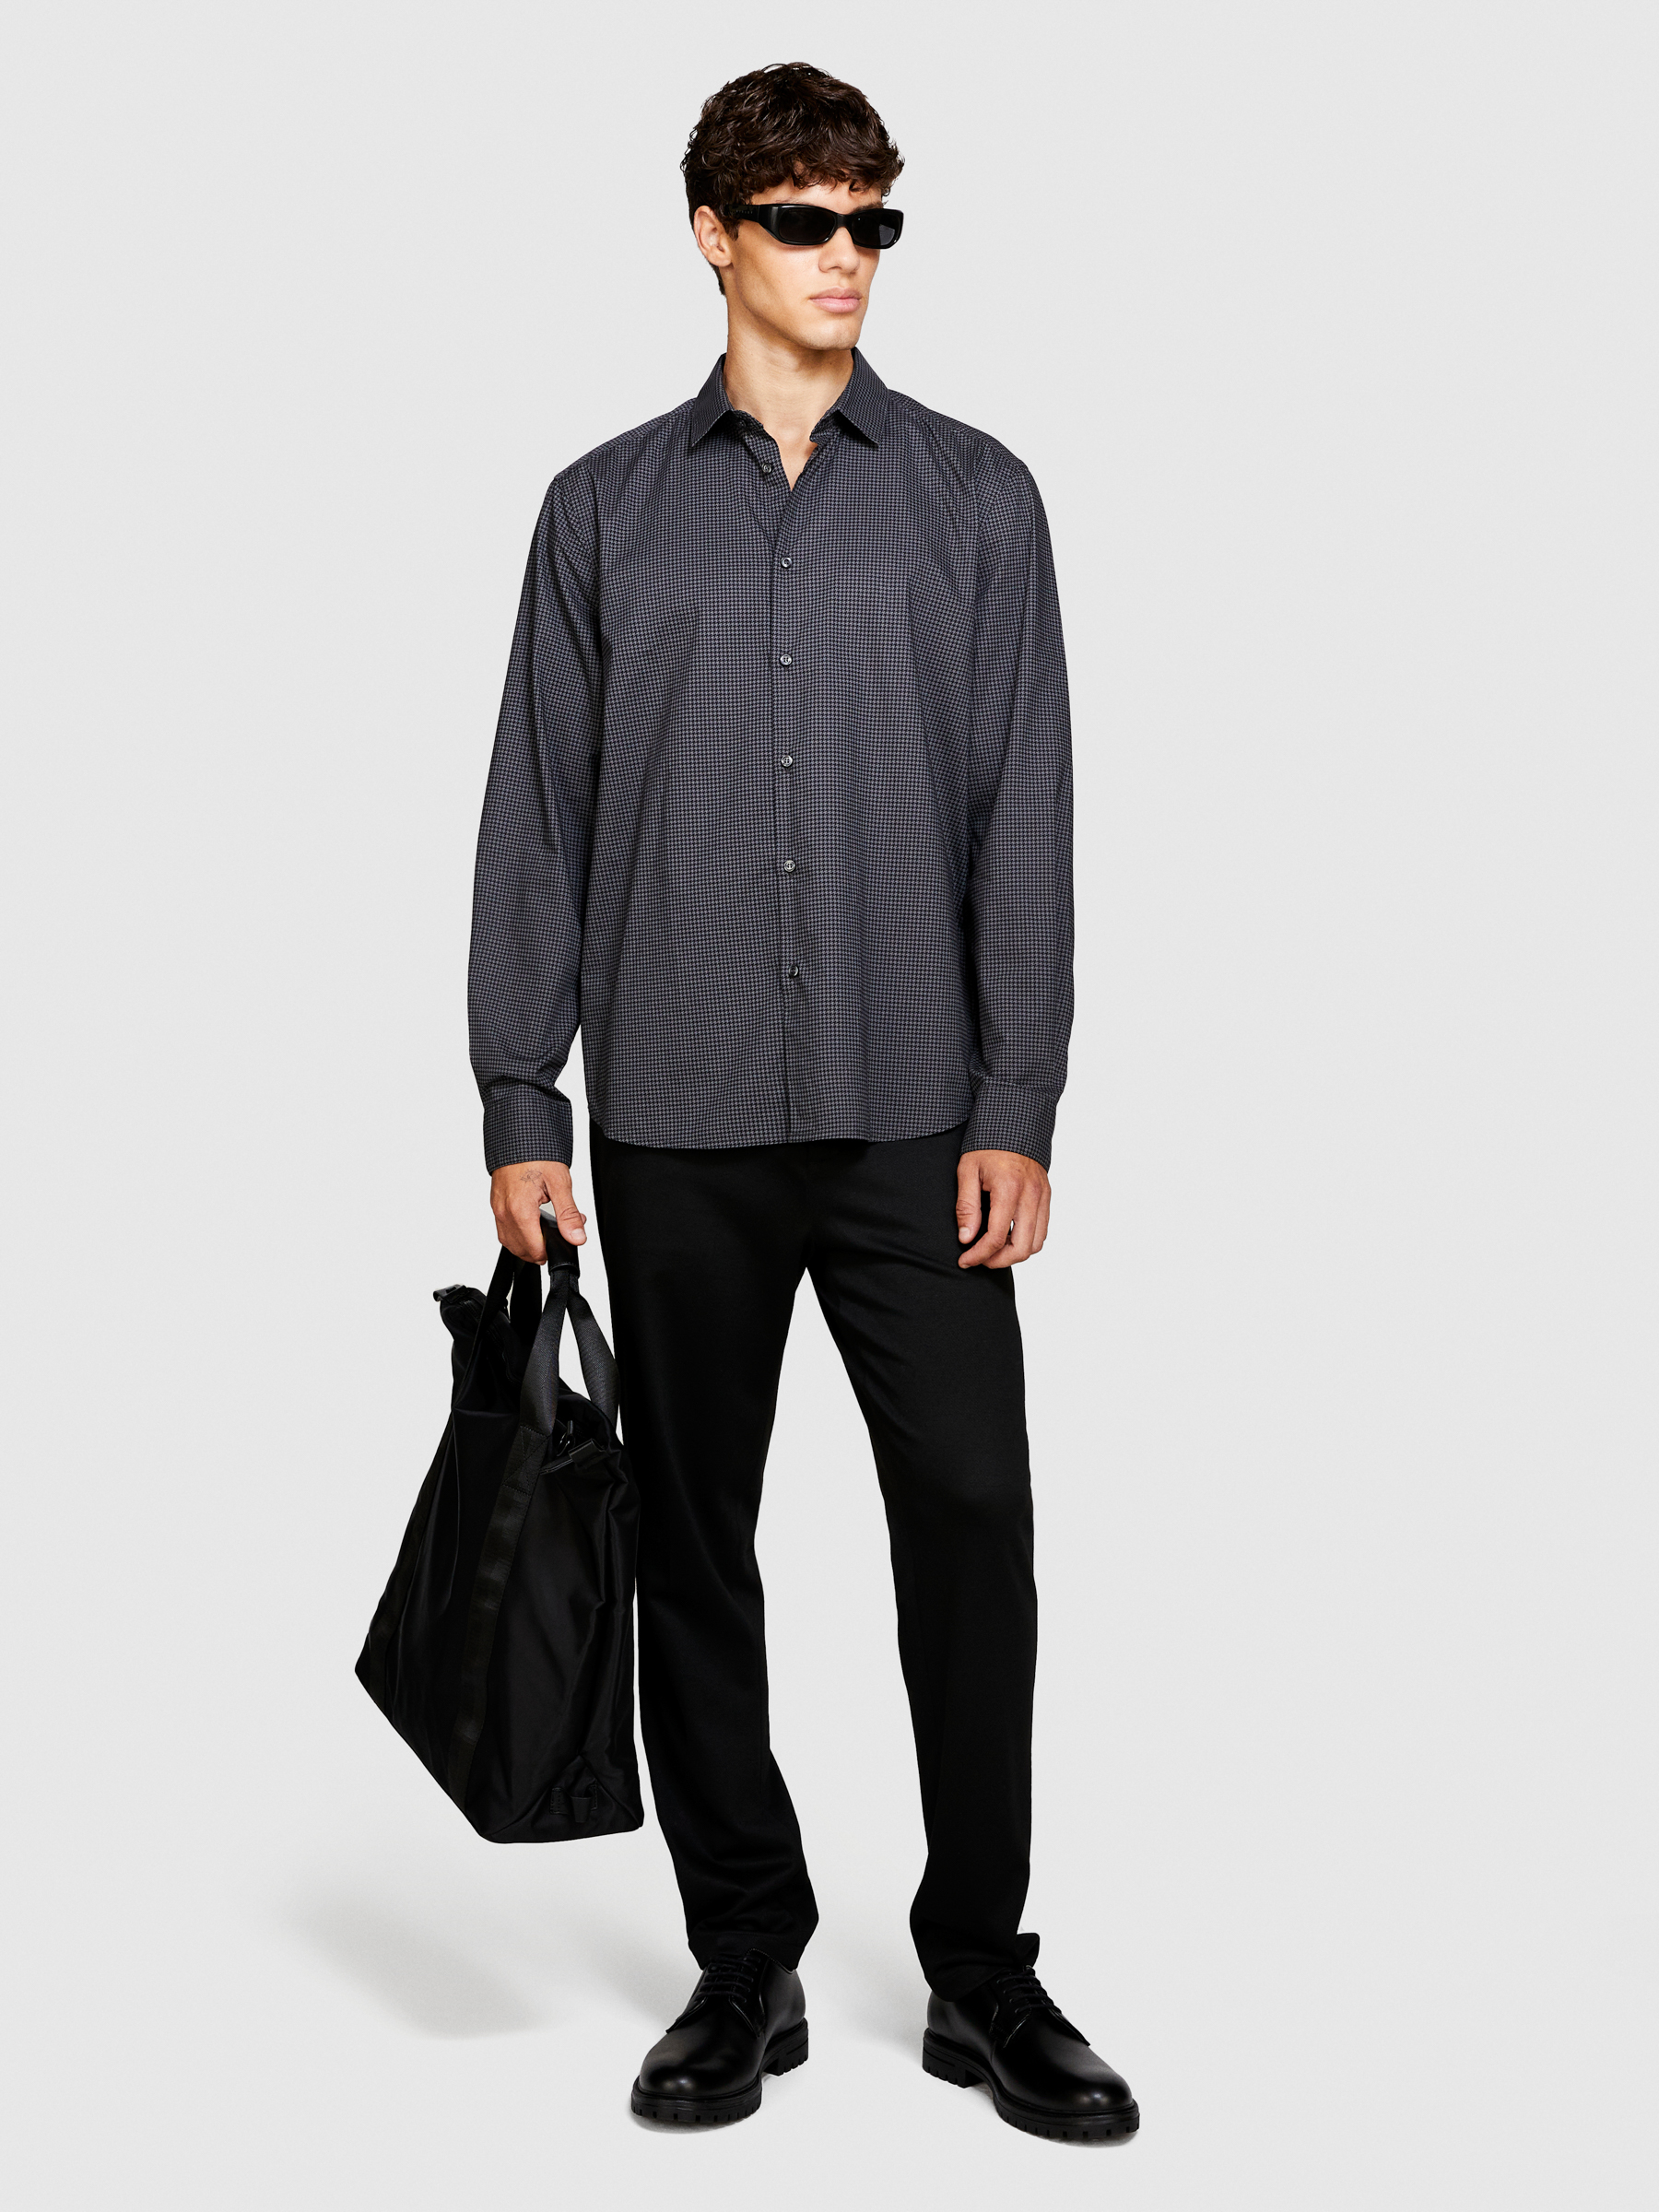 Sisley - Printed Shirt, Man, Dark Gray, Size: S